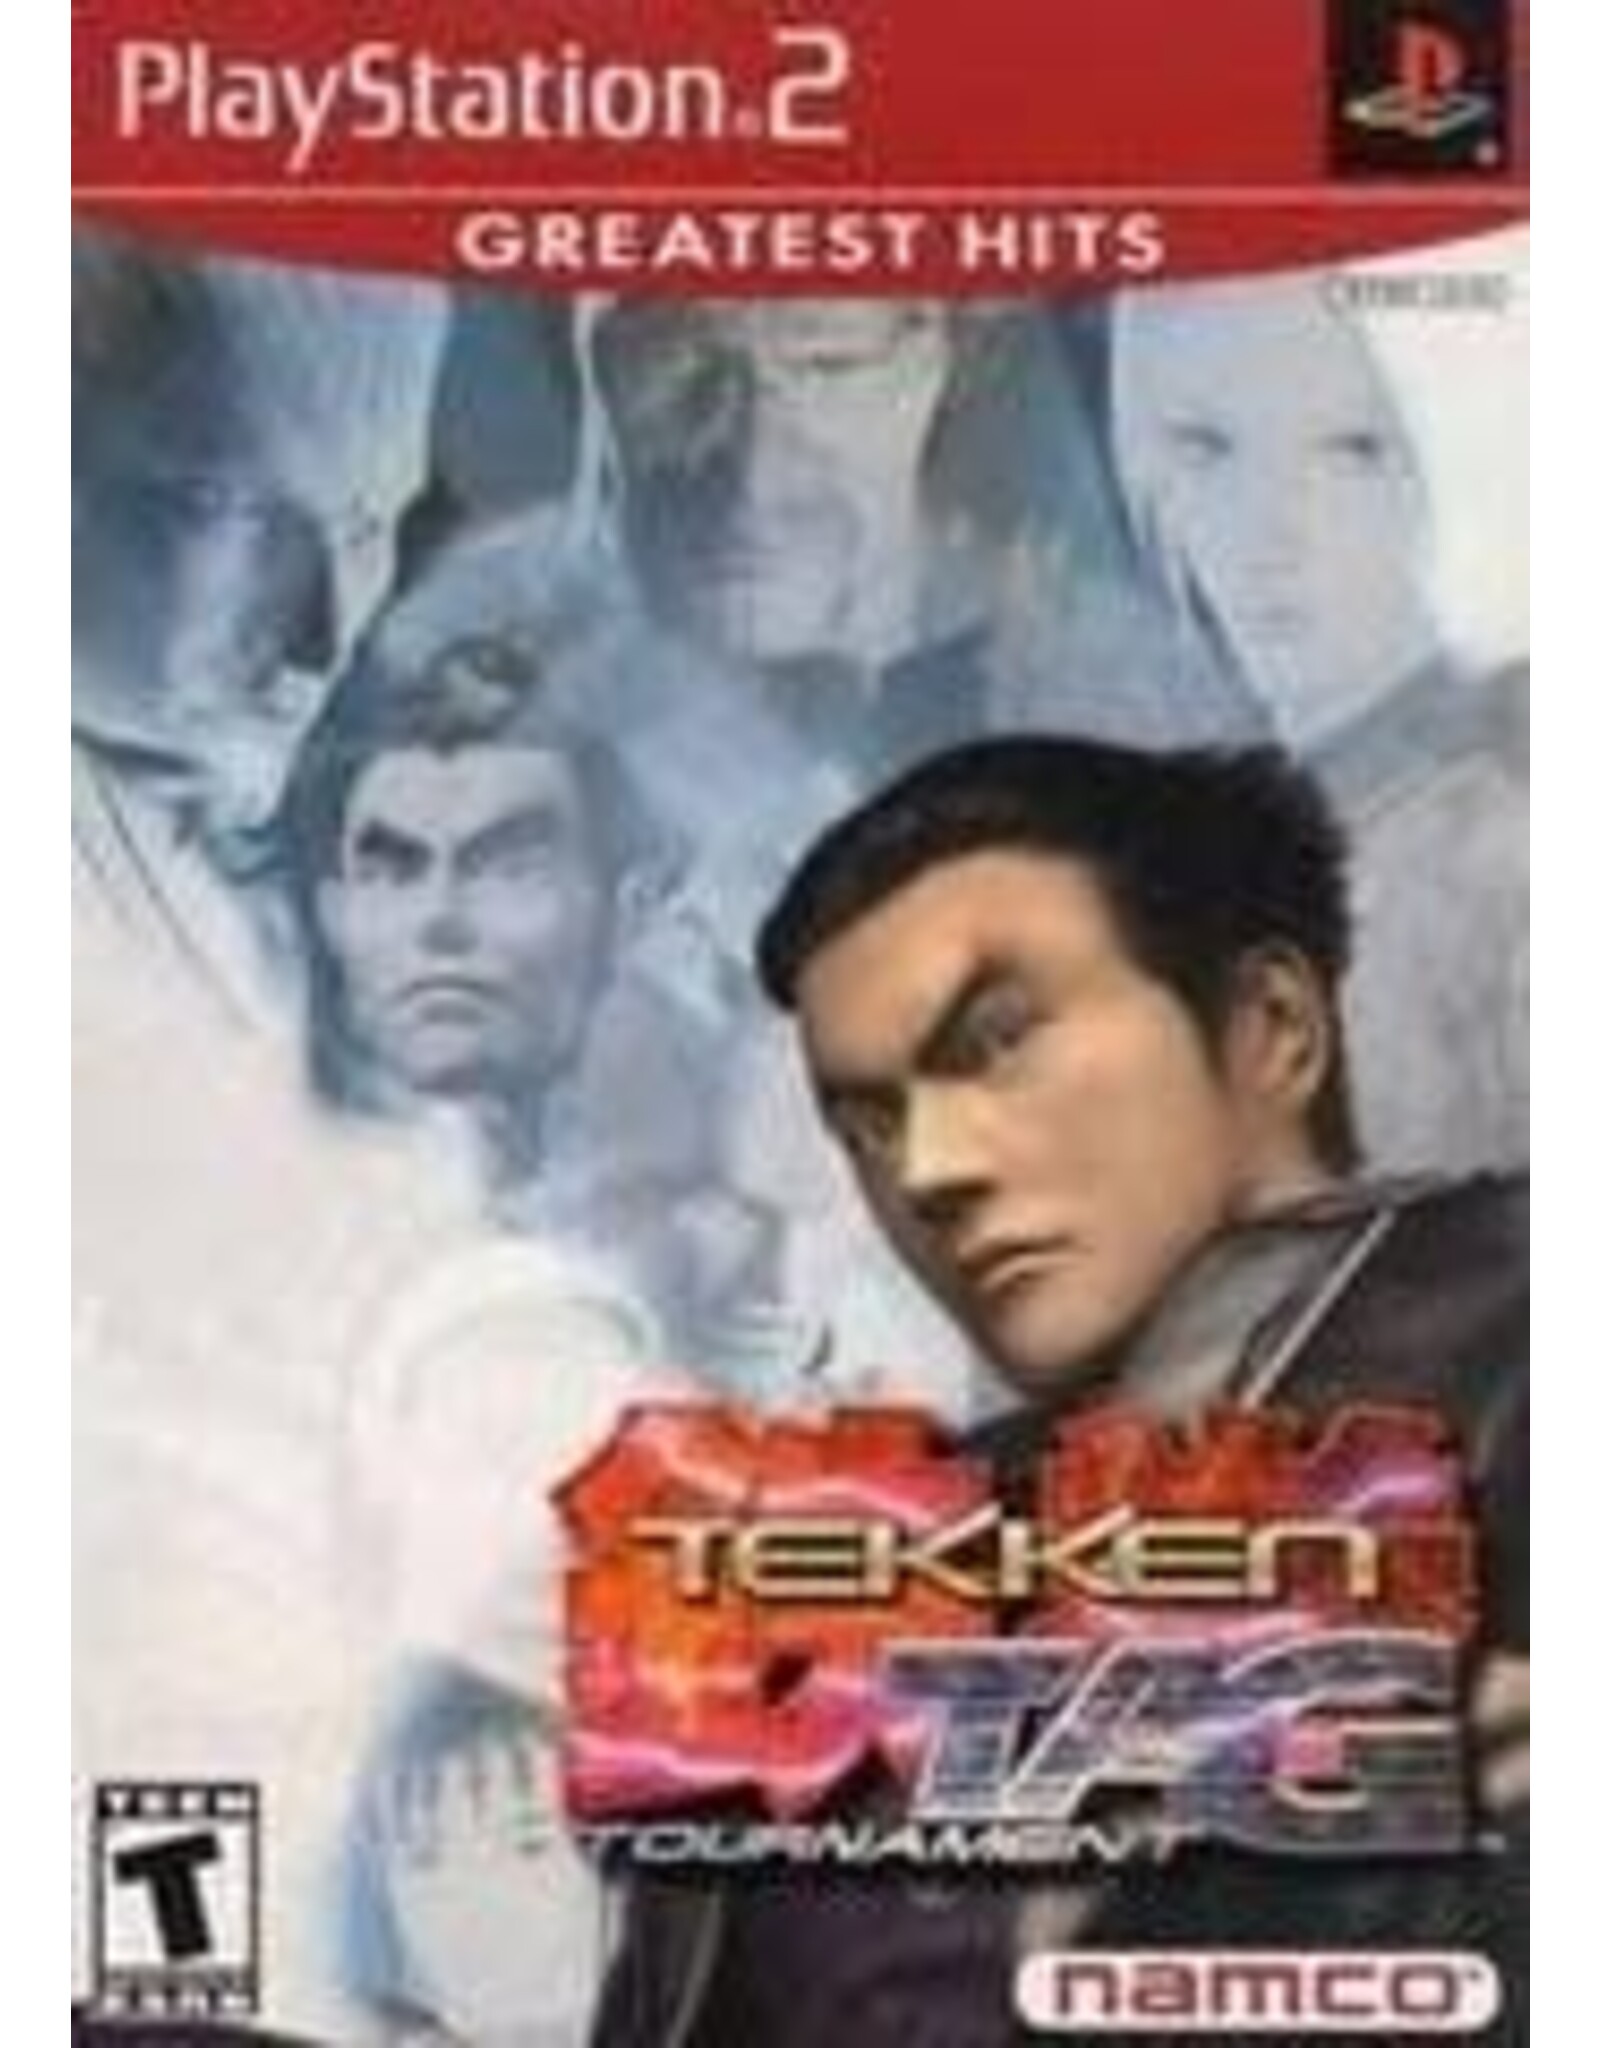 Playstation 2 Tekken Tag Tournament (Greatest Hits, CiB)